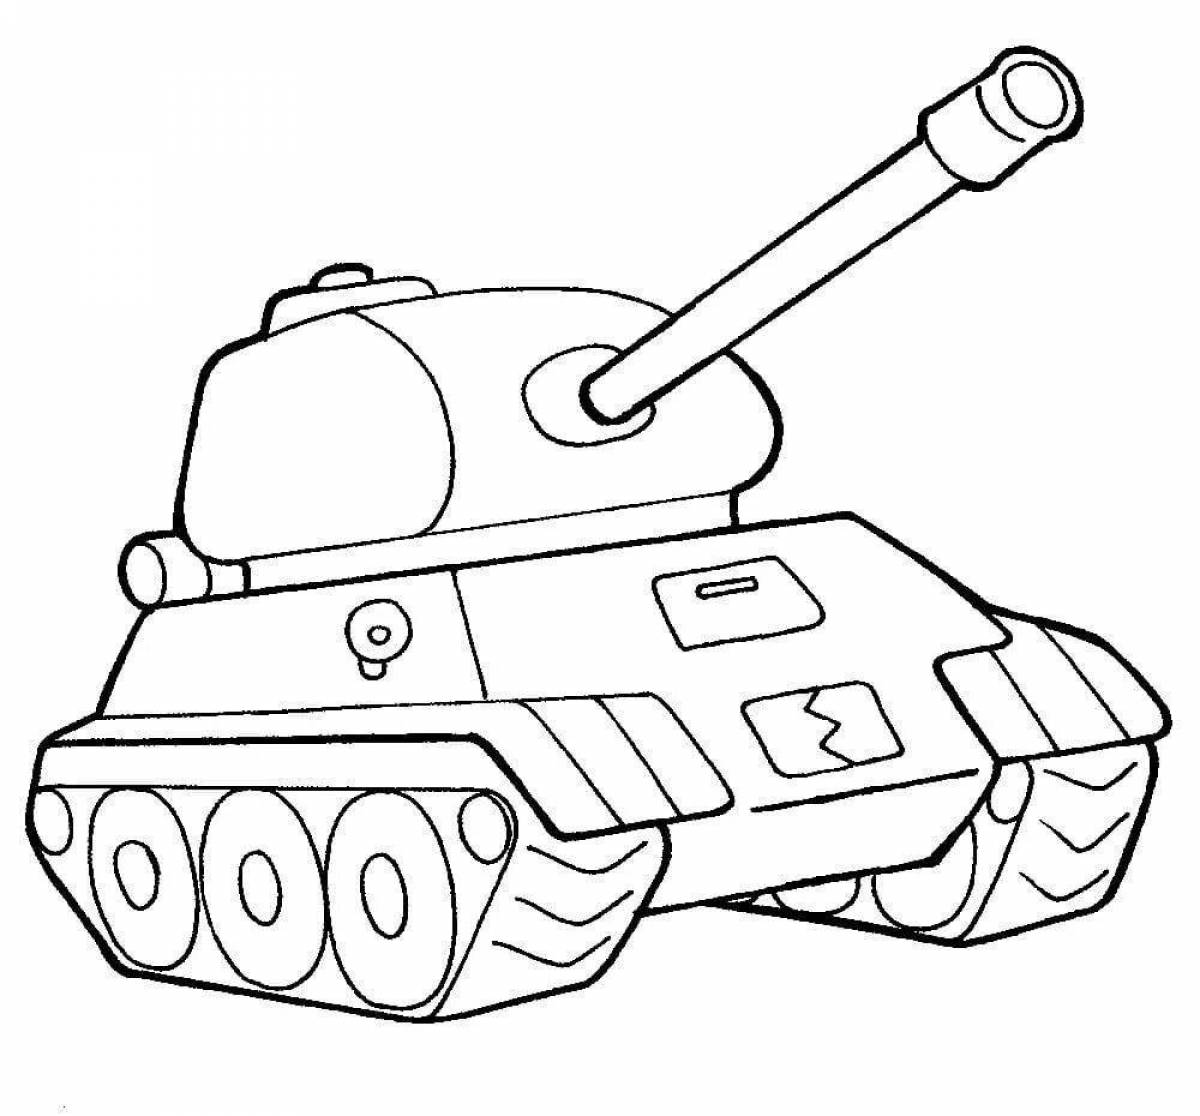 Entertaining children's coloring of tanks